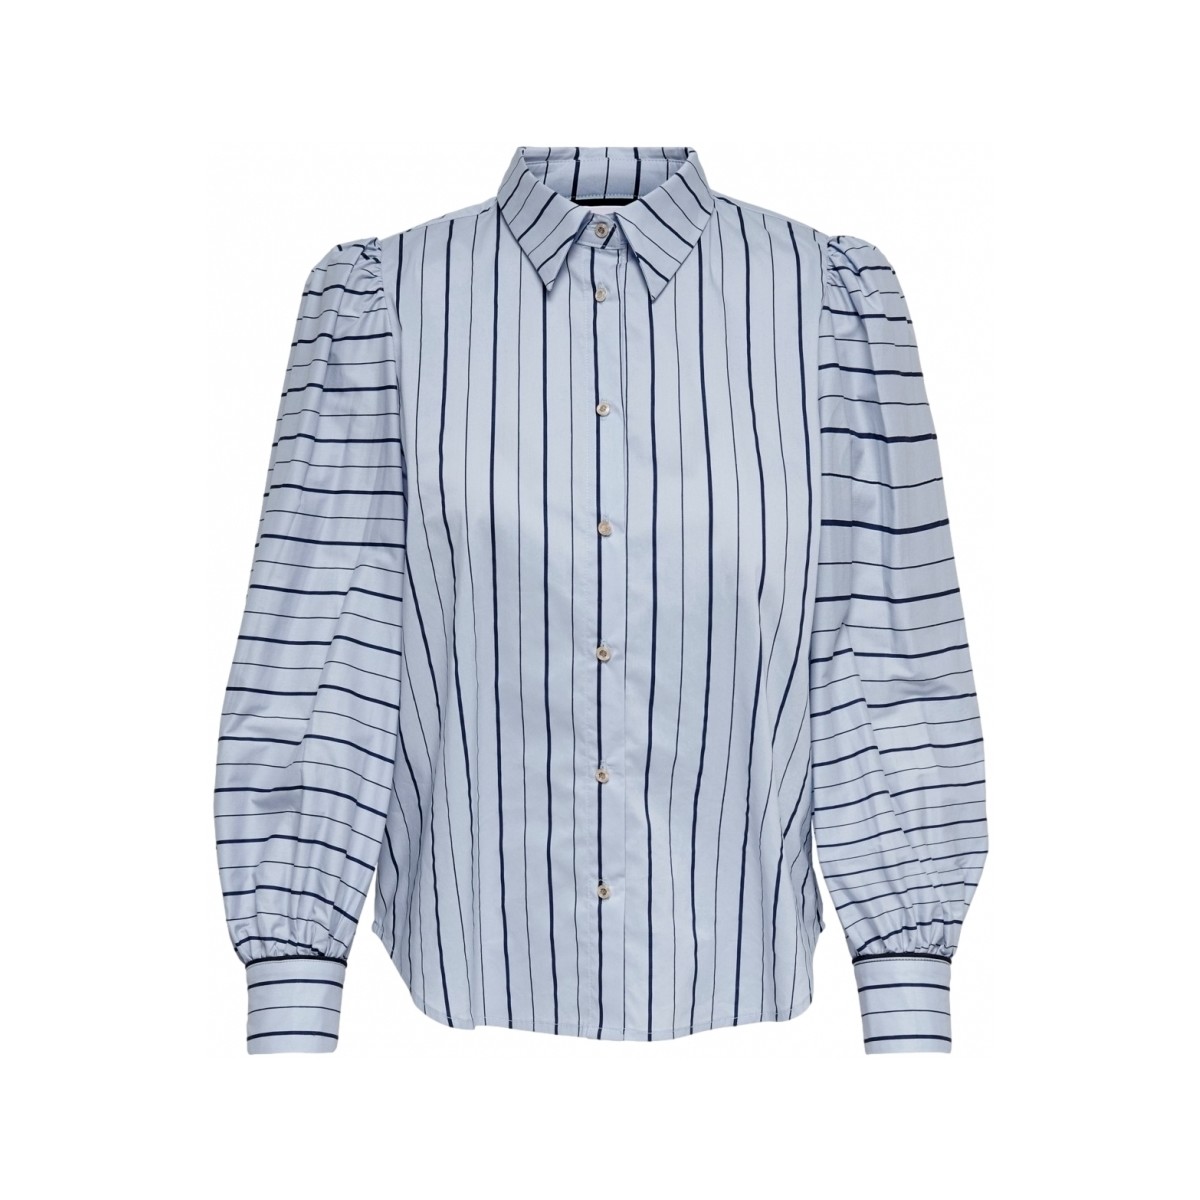 Textiel Dames Tops / Blousjes La Strada Shirt Trinny L/S - Tempes /Night Blauw